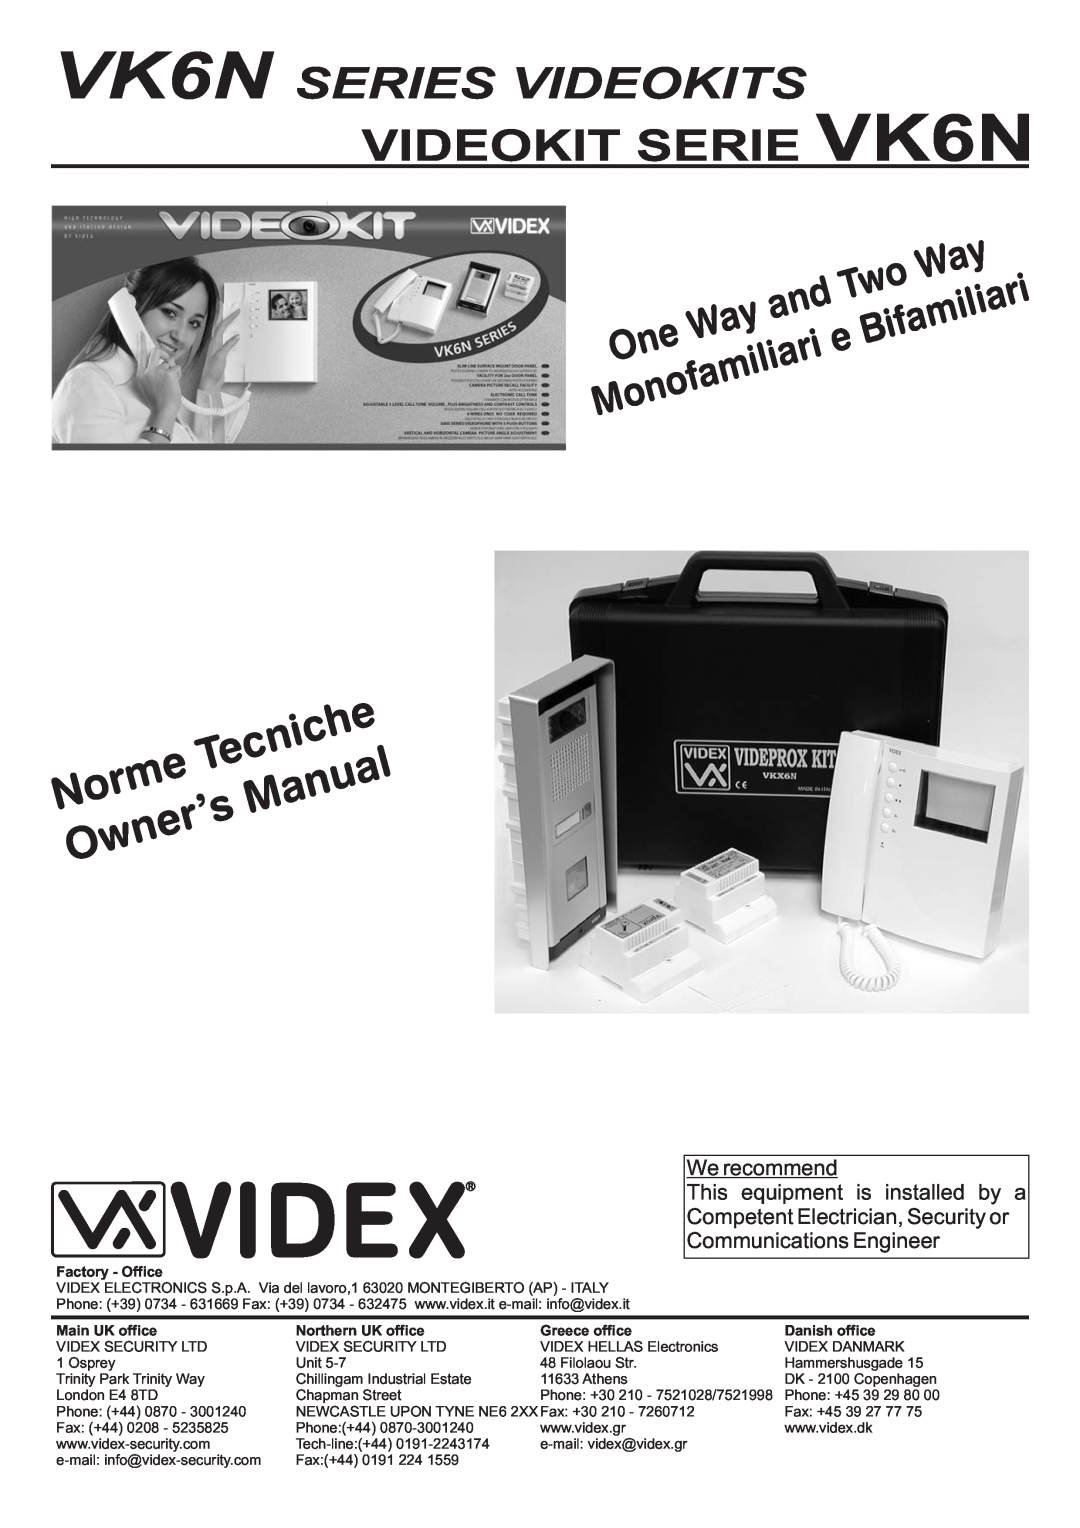 Videx owner manual VK6N SERIES VIDEOKITS, VIDEOKIT SERIE VK6N, Norme, Tecniche, Manual, Owner’s, eBifamiliari 